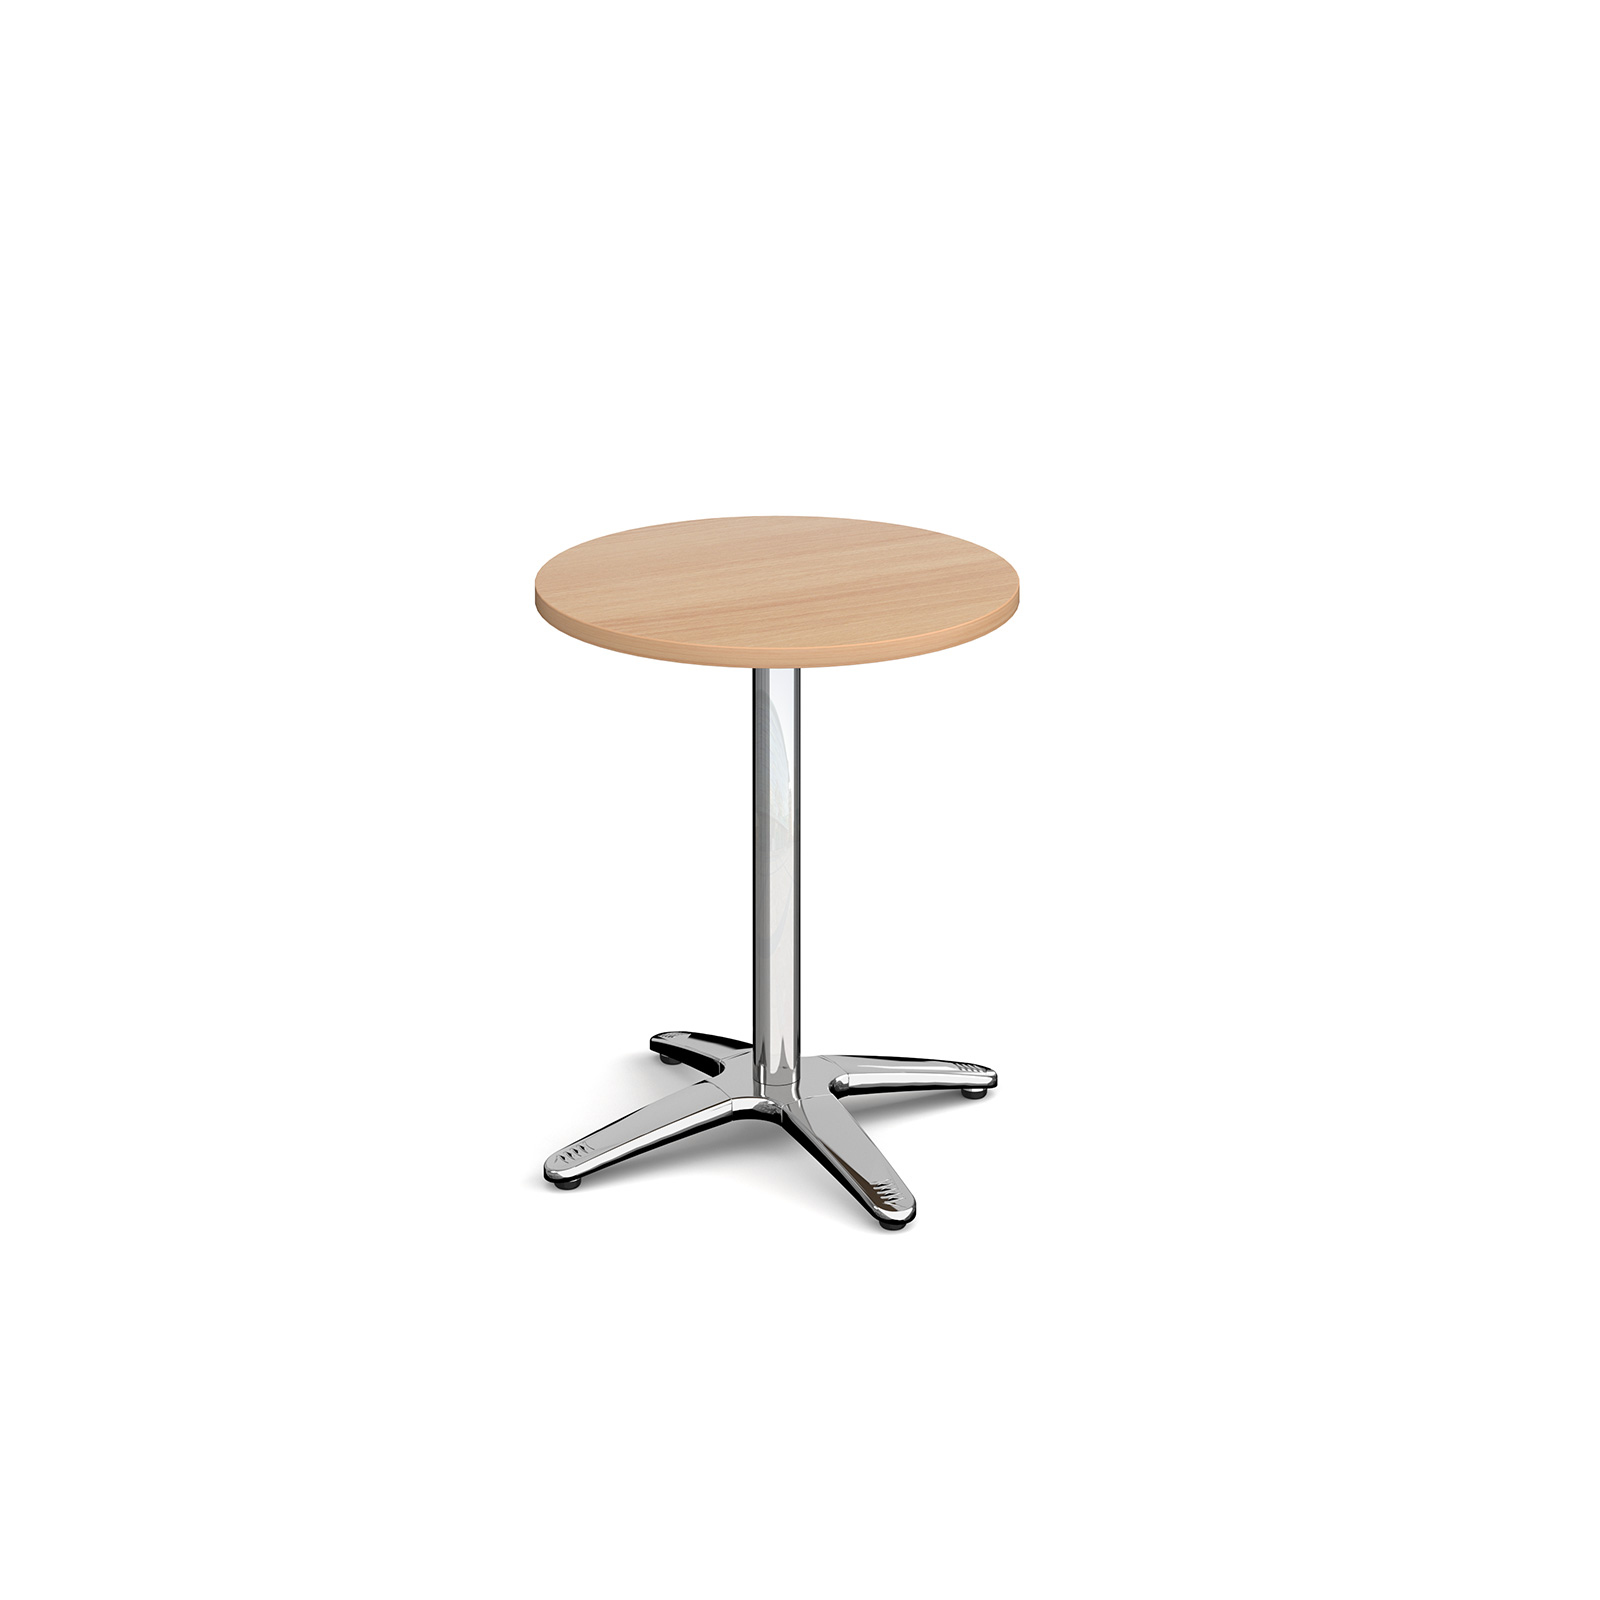 Roma circular dining table with 4 leg chrome base 600mm - beech